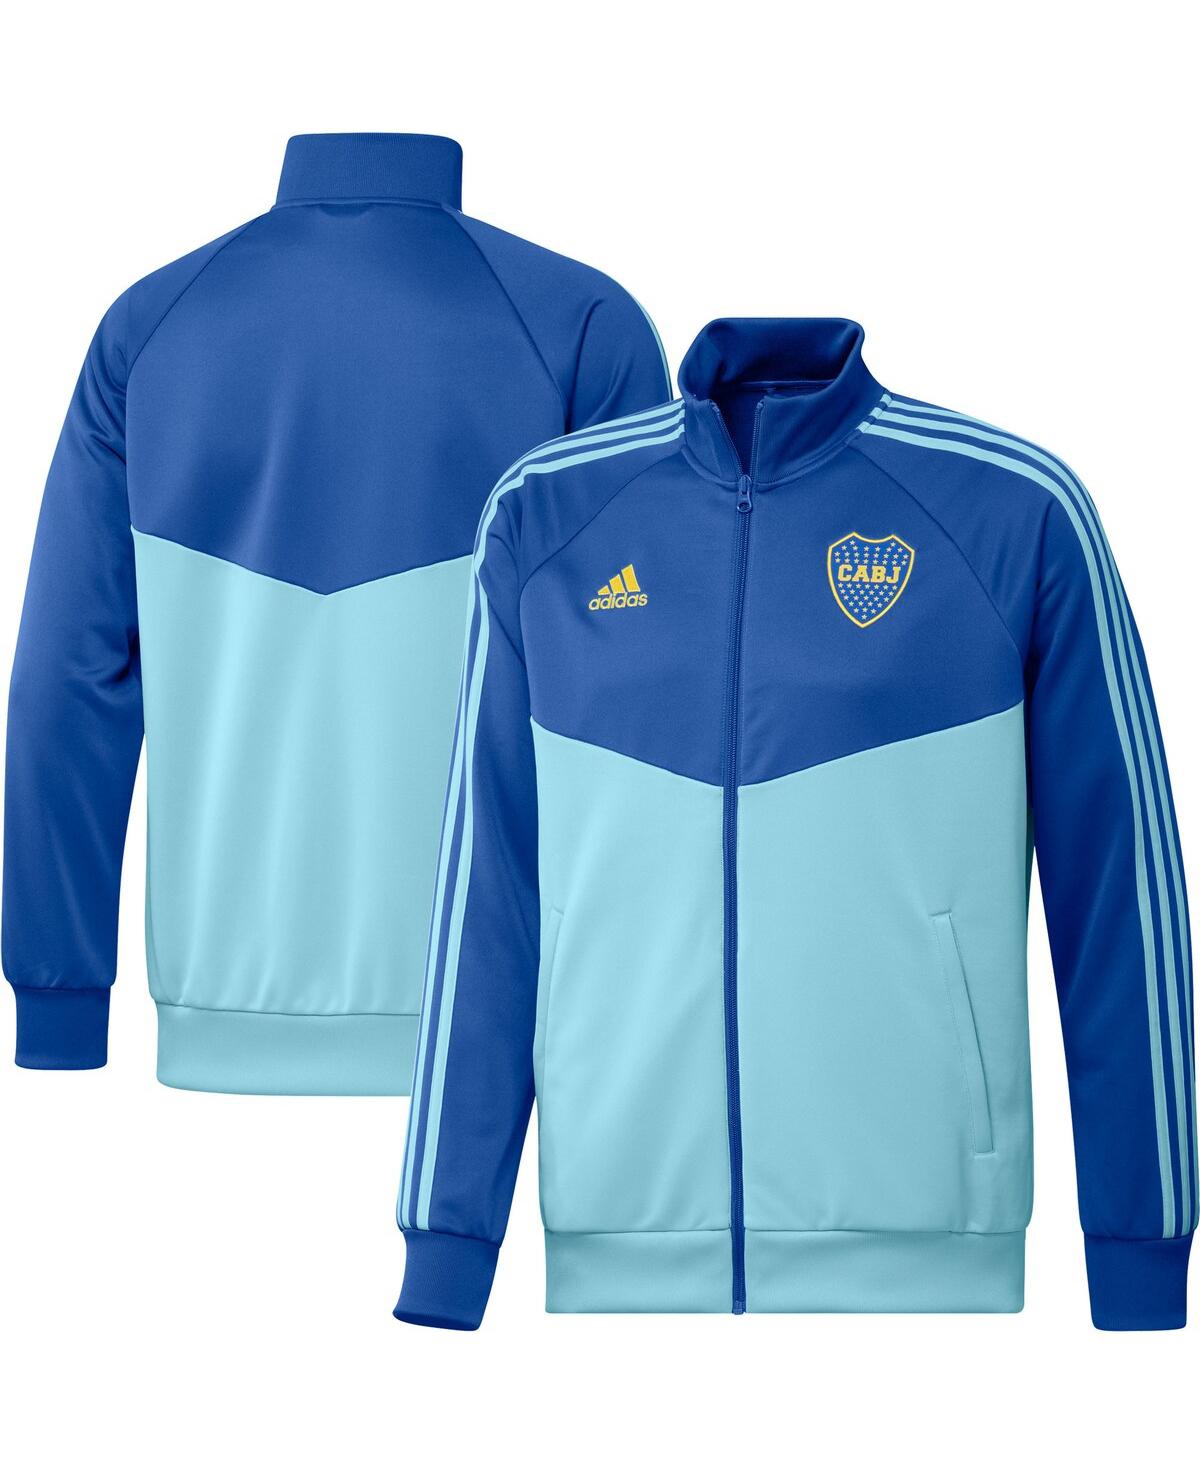 Adidas Originals Men's Adidas Blue Boca Juniors Dna Raglan Full-zip Track Jacket